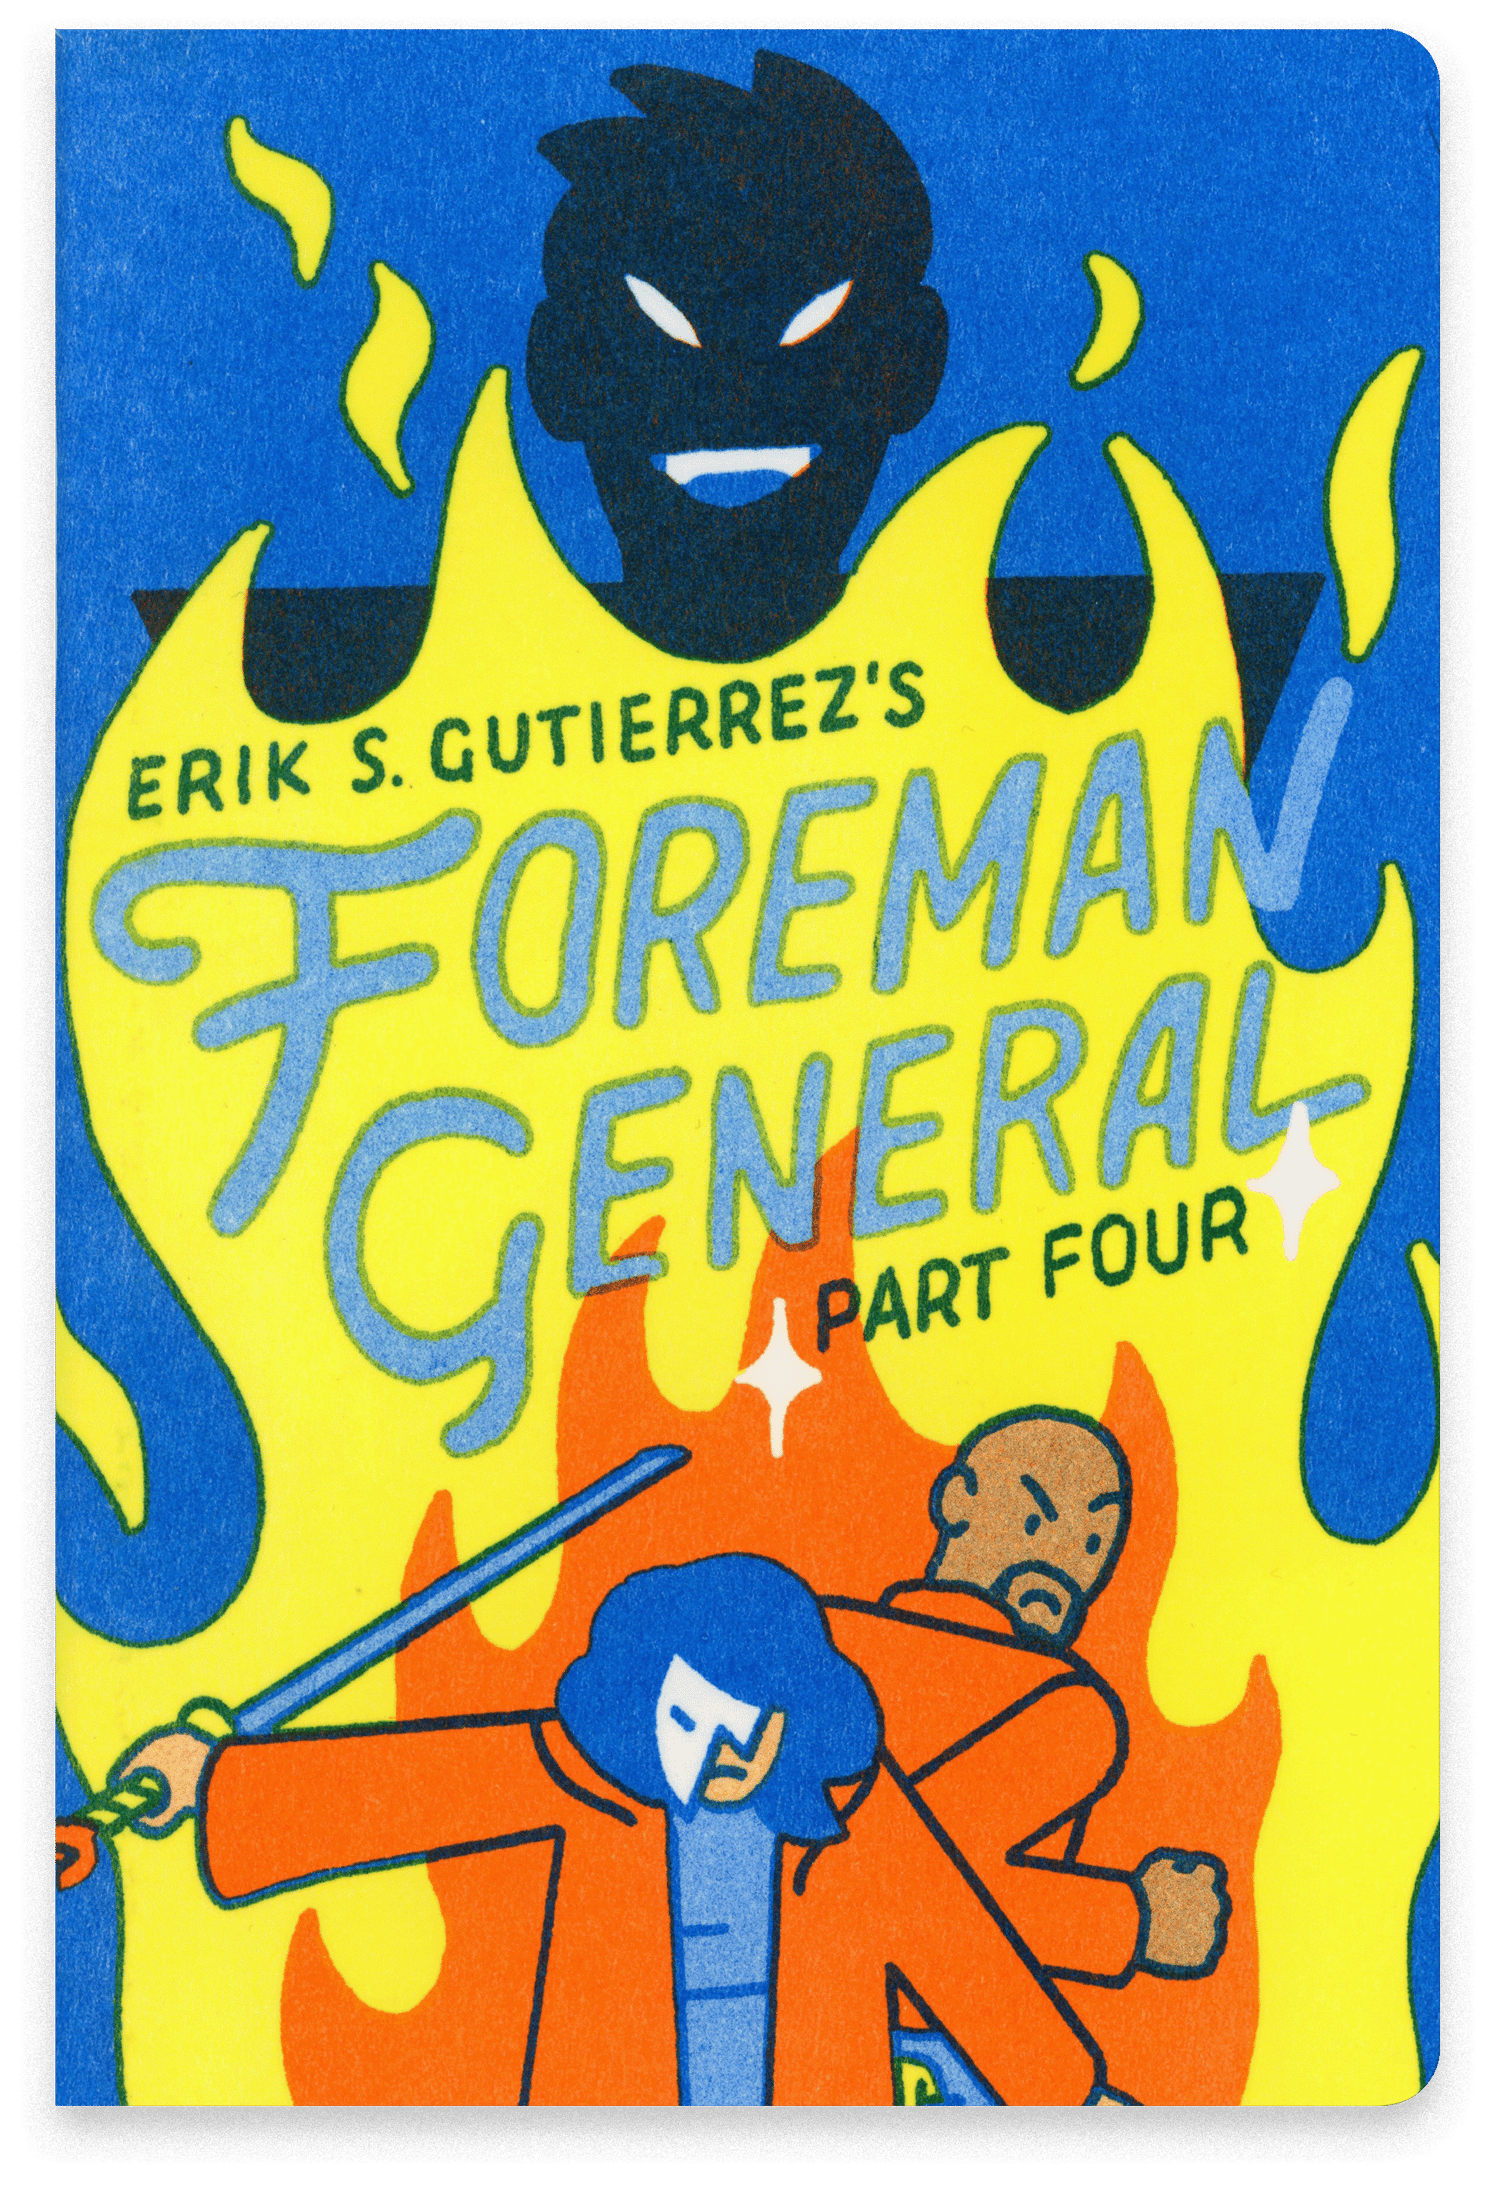 Foreman General: Part Four